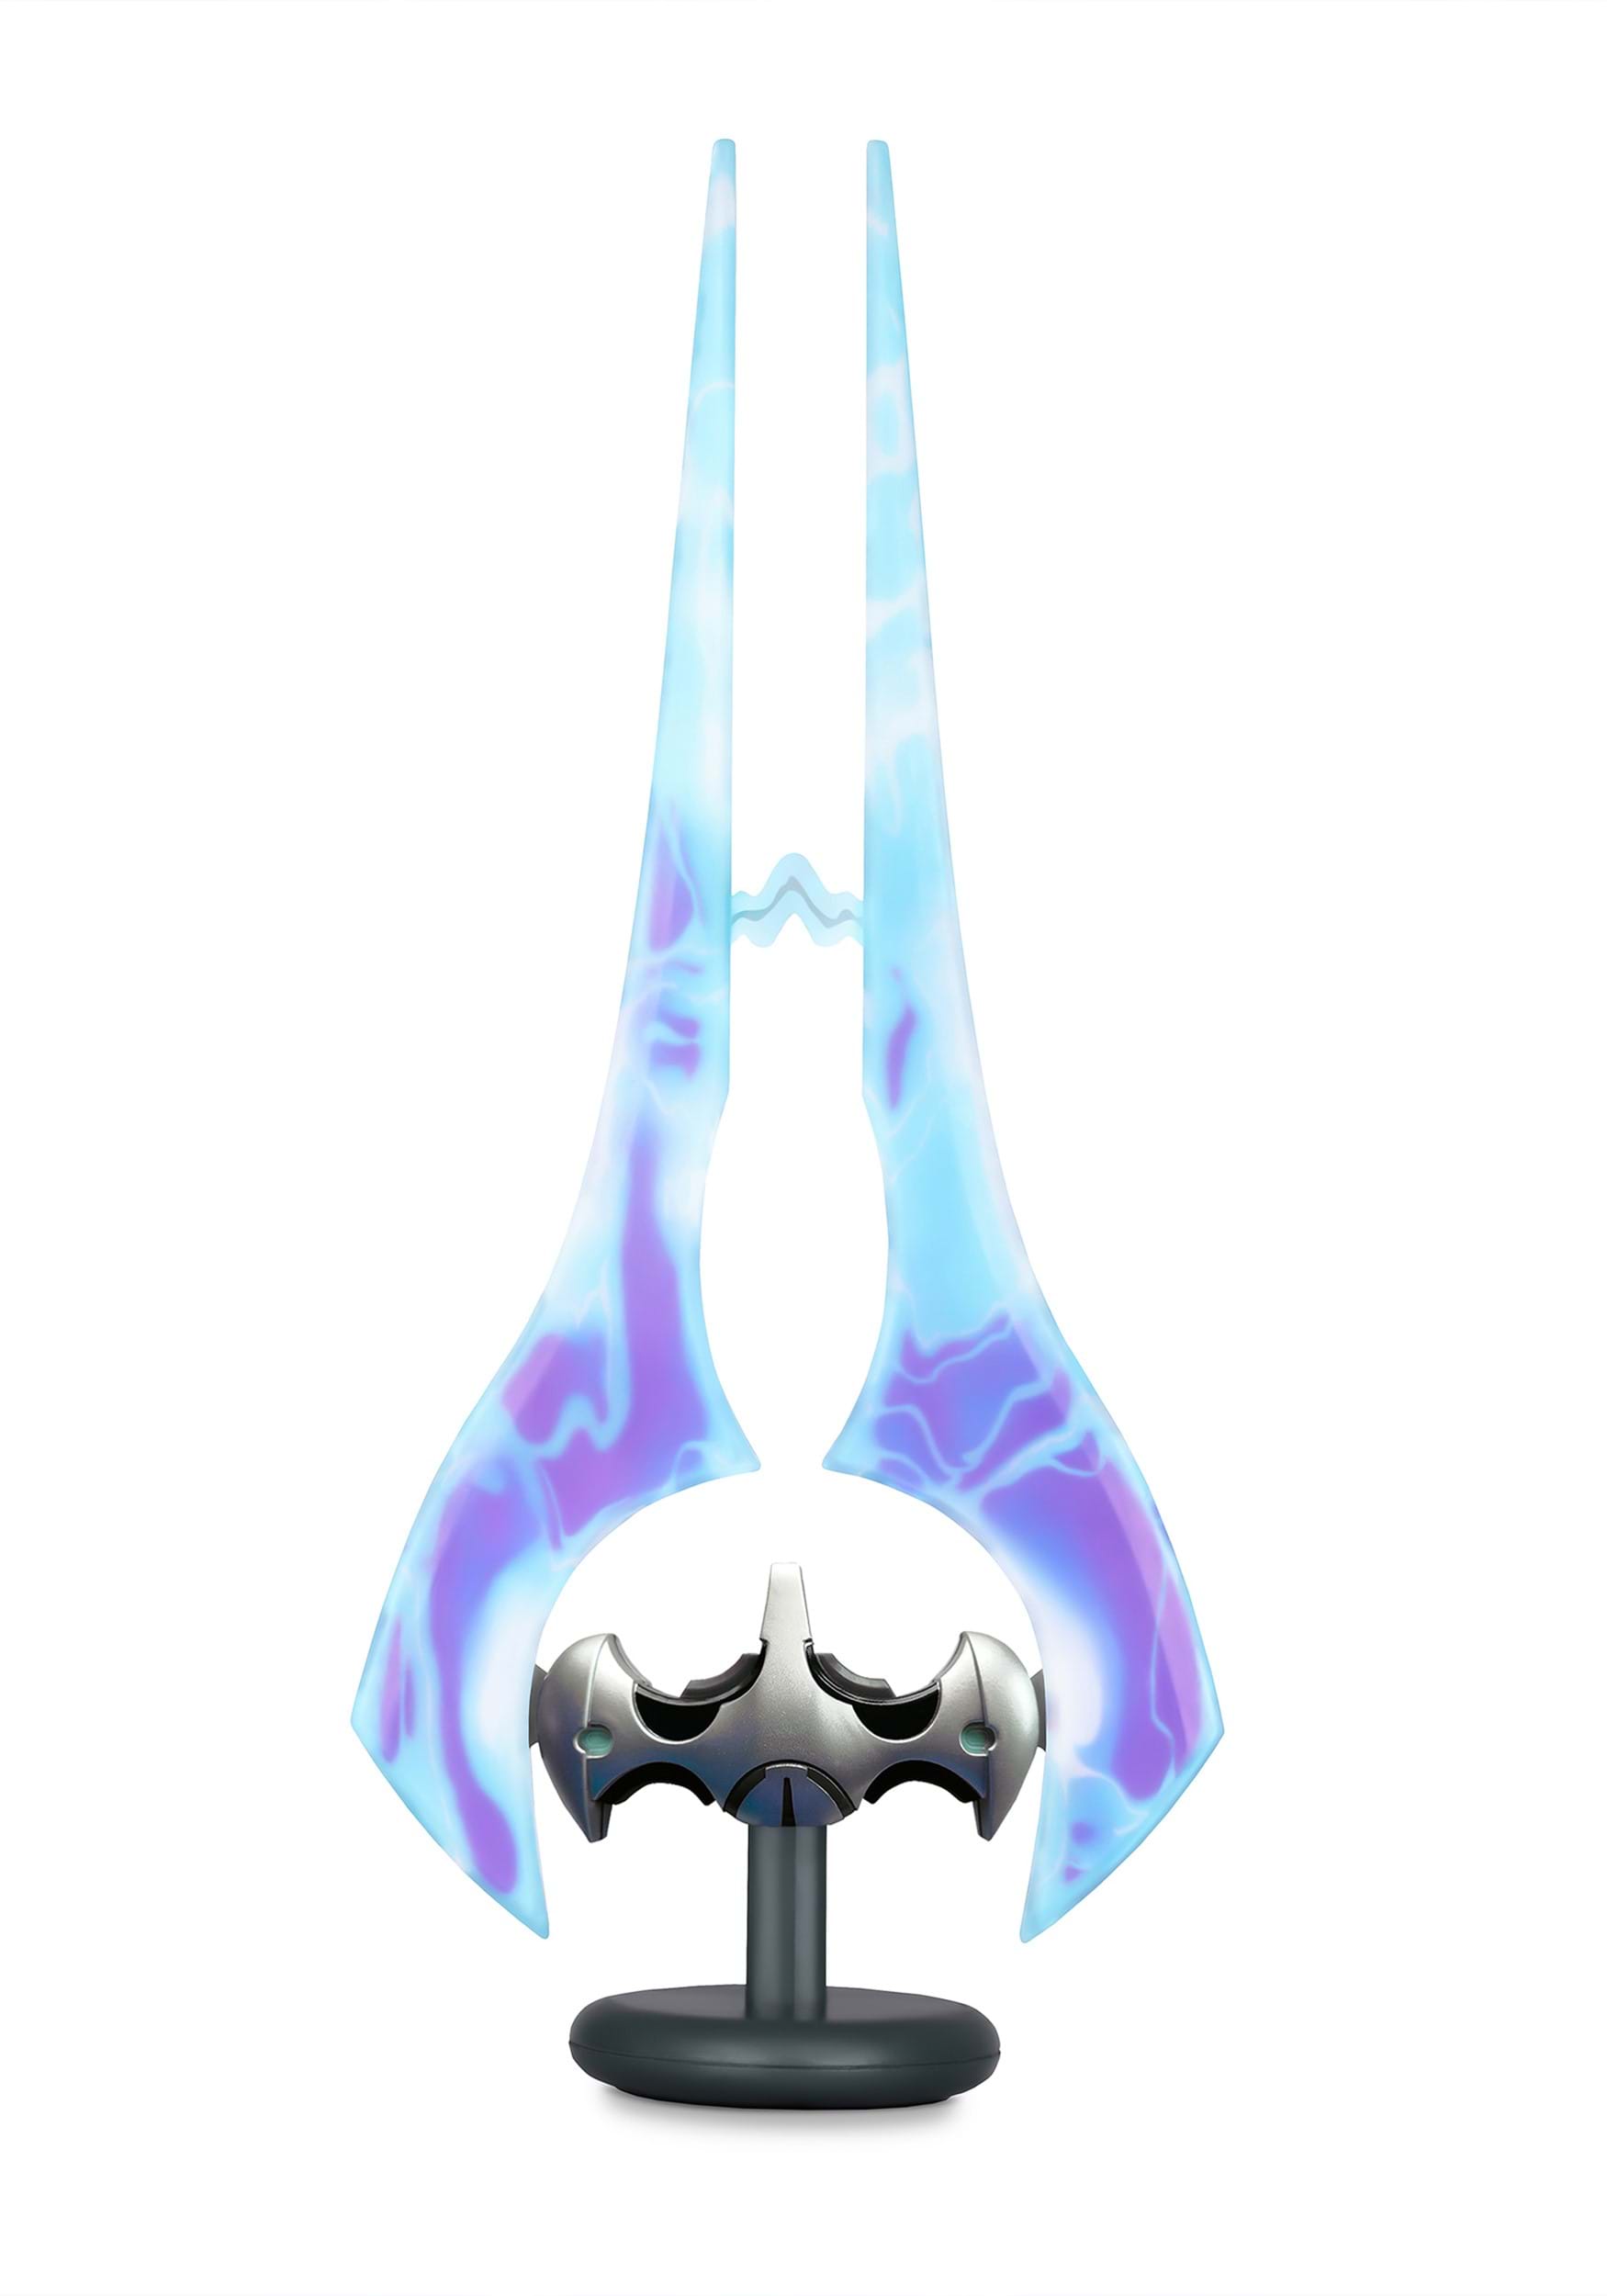 14 Inch Light Up Halo Sword Lamp